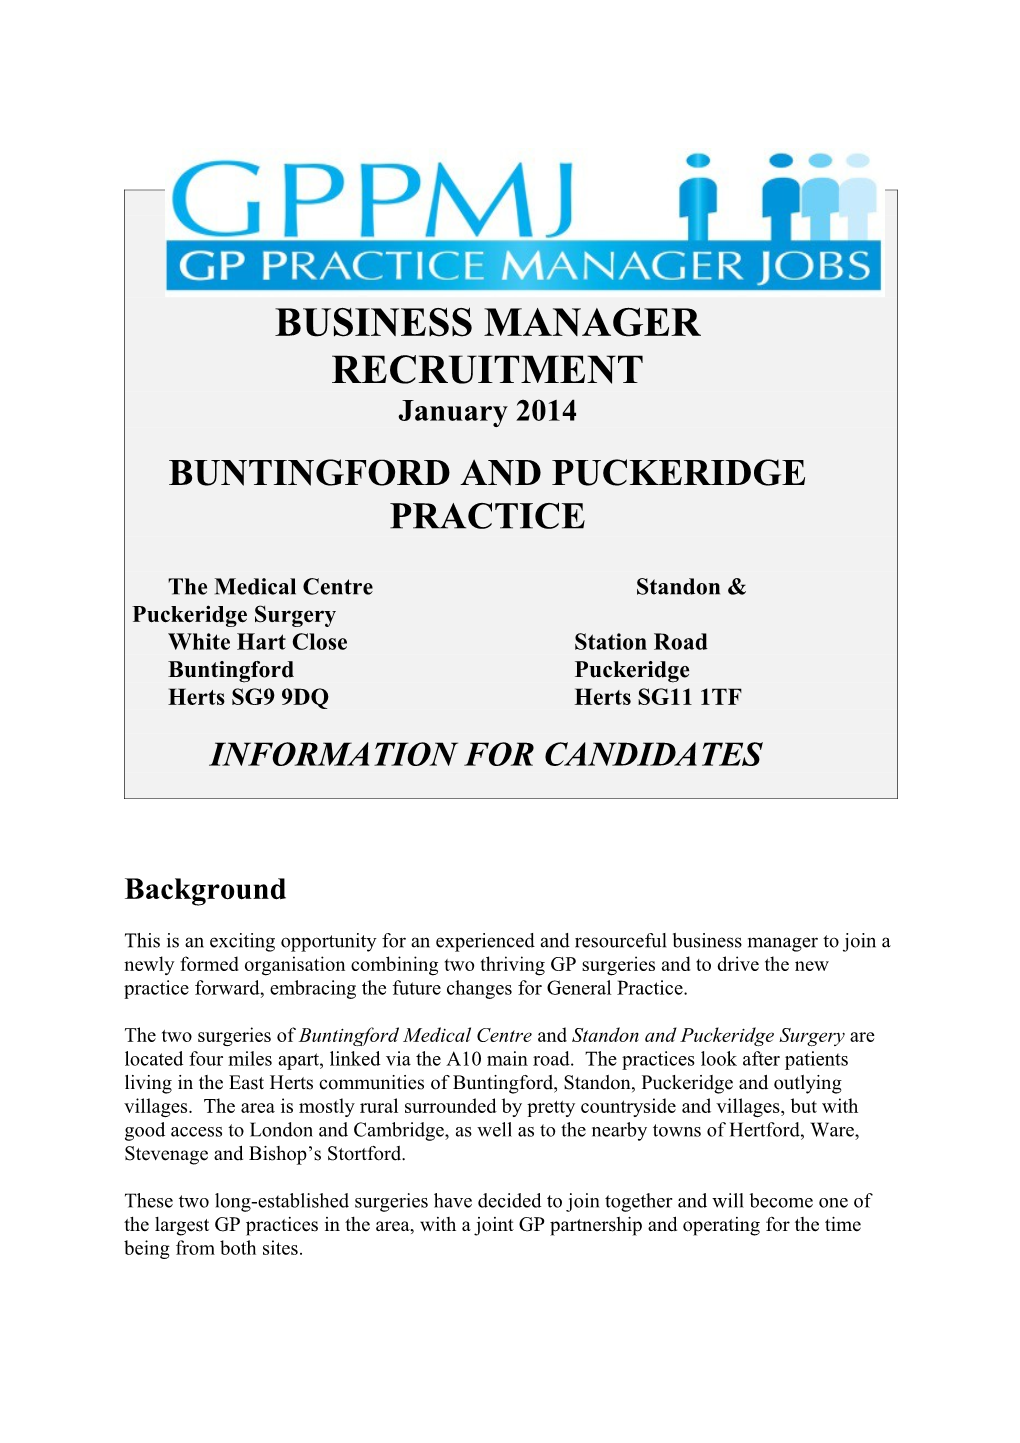 Buntingford and Puckeridge Practice